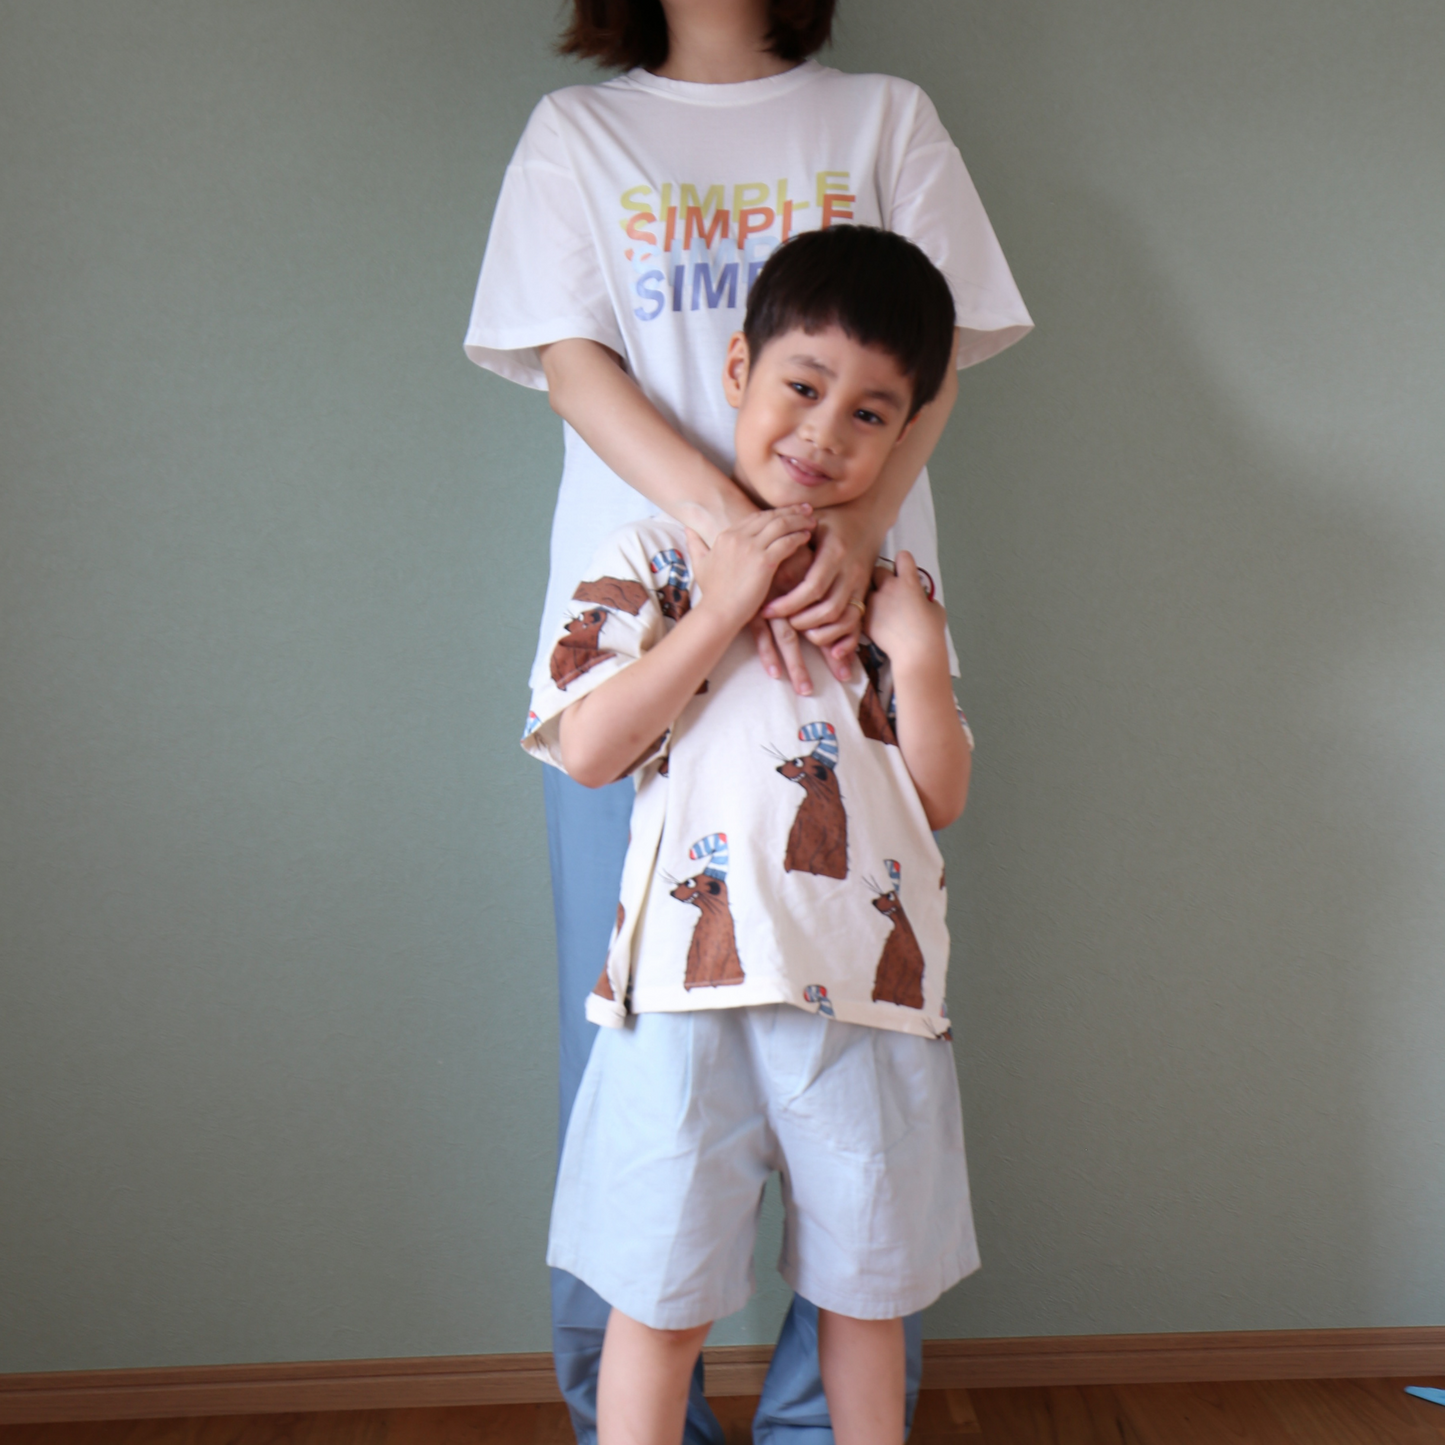 SIMPLE ロゴTシャツ / SIMPLE logo tee (レディース 服) - kids clothes shop GUZUGUZU